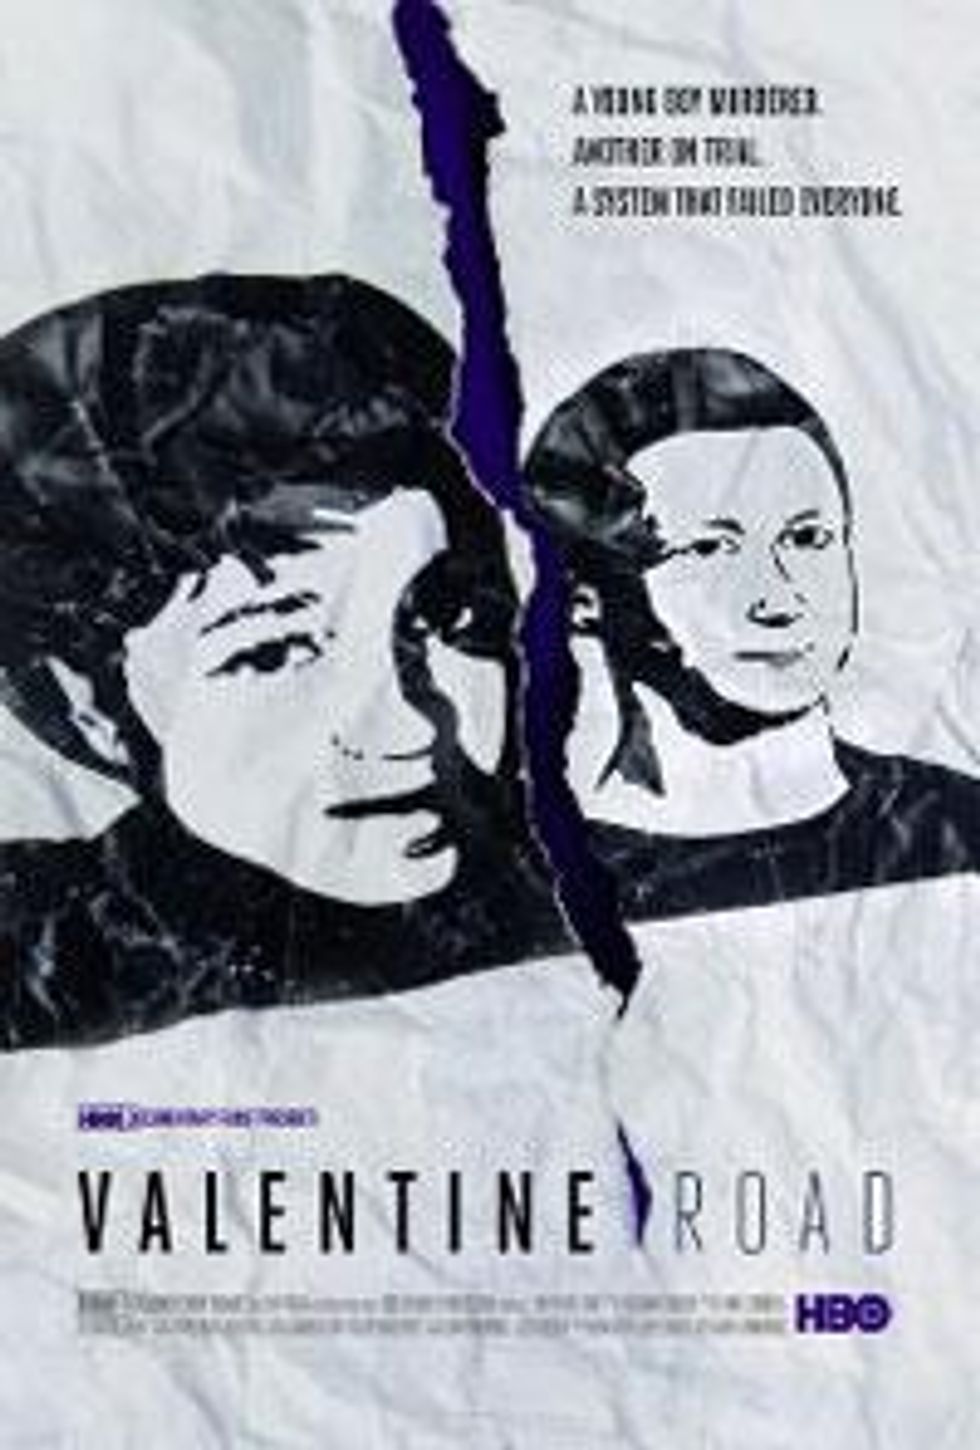 Valentine_roadx200_0